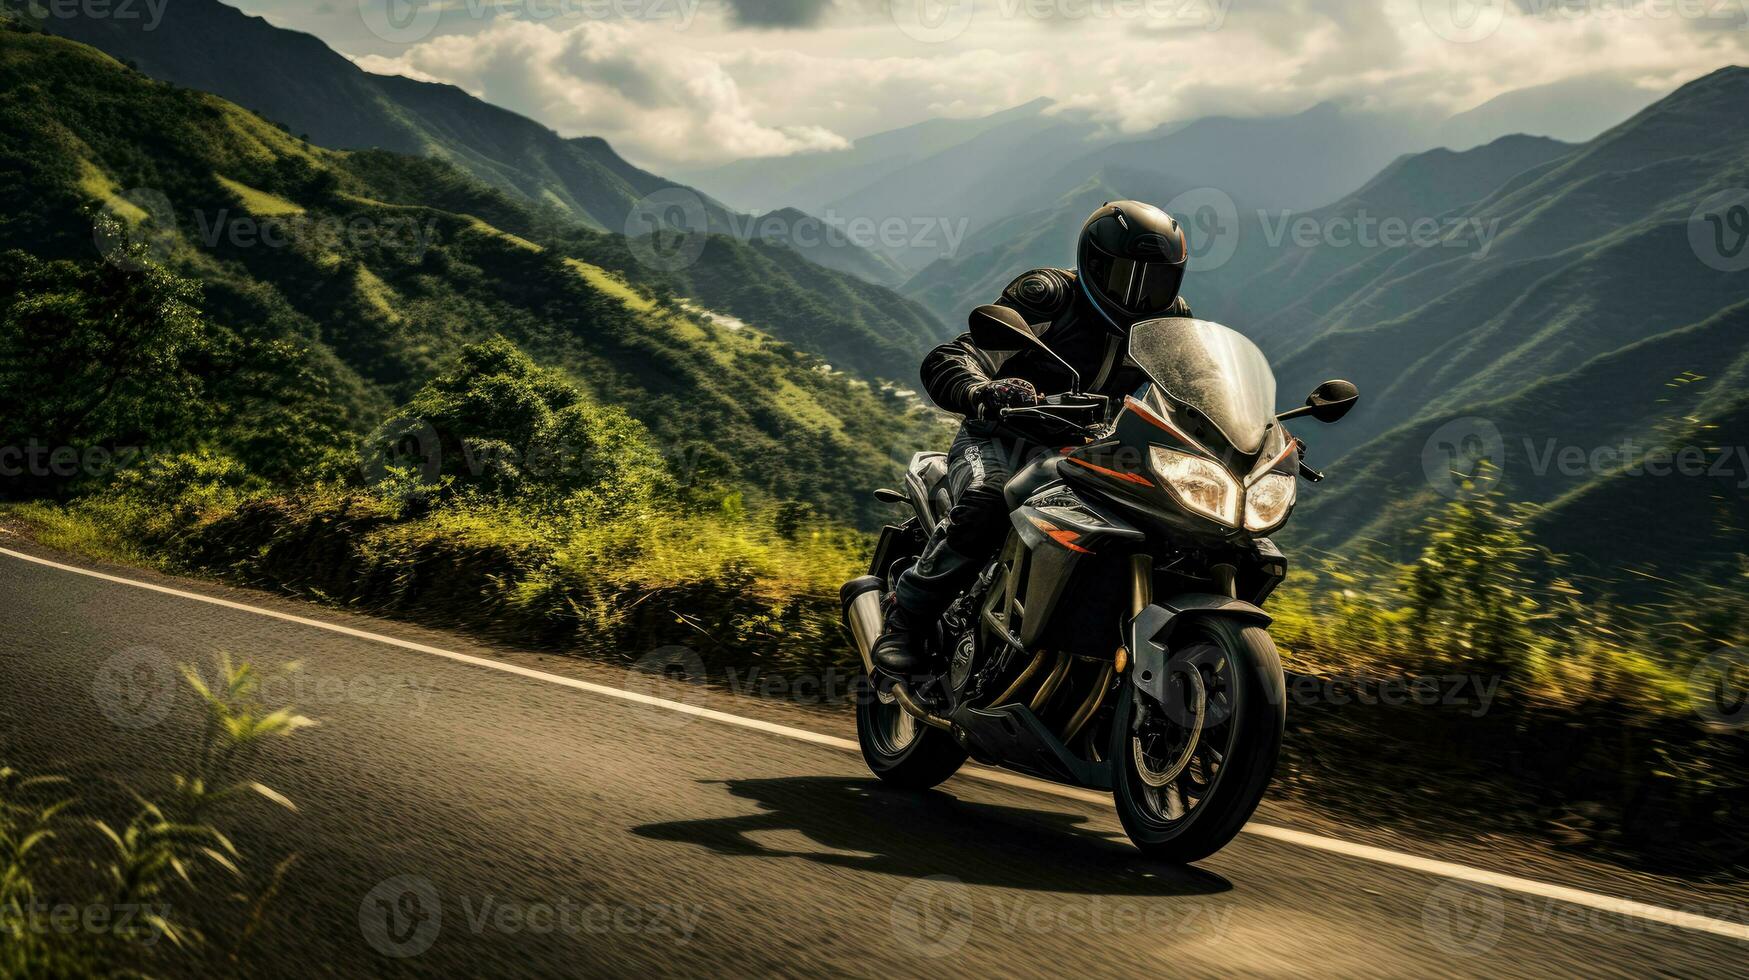 motociclista navega enrolamento montanha estradas encharcado dentro a cênico beleza foto